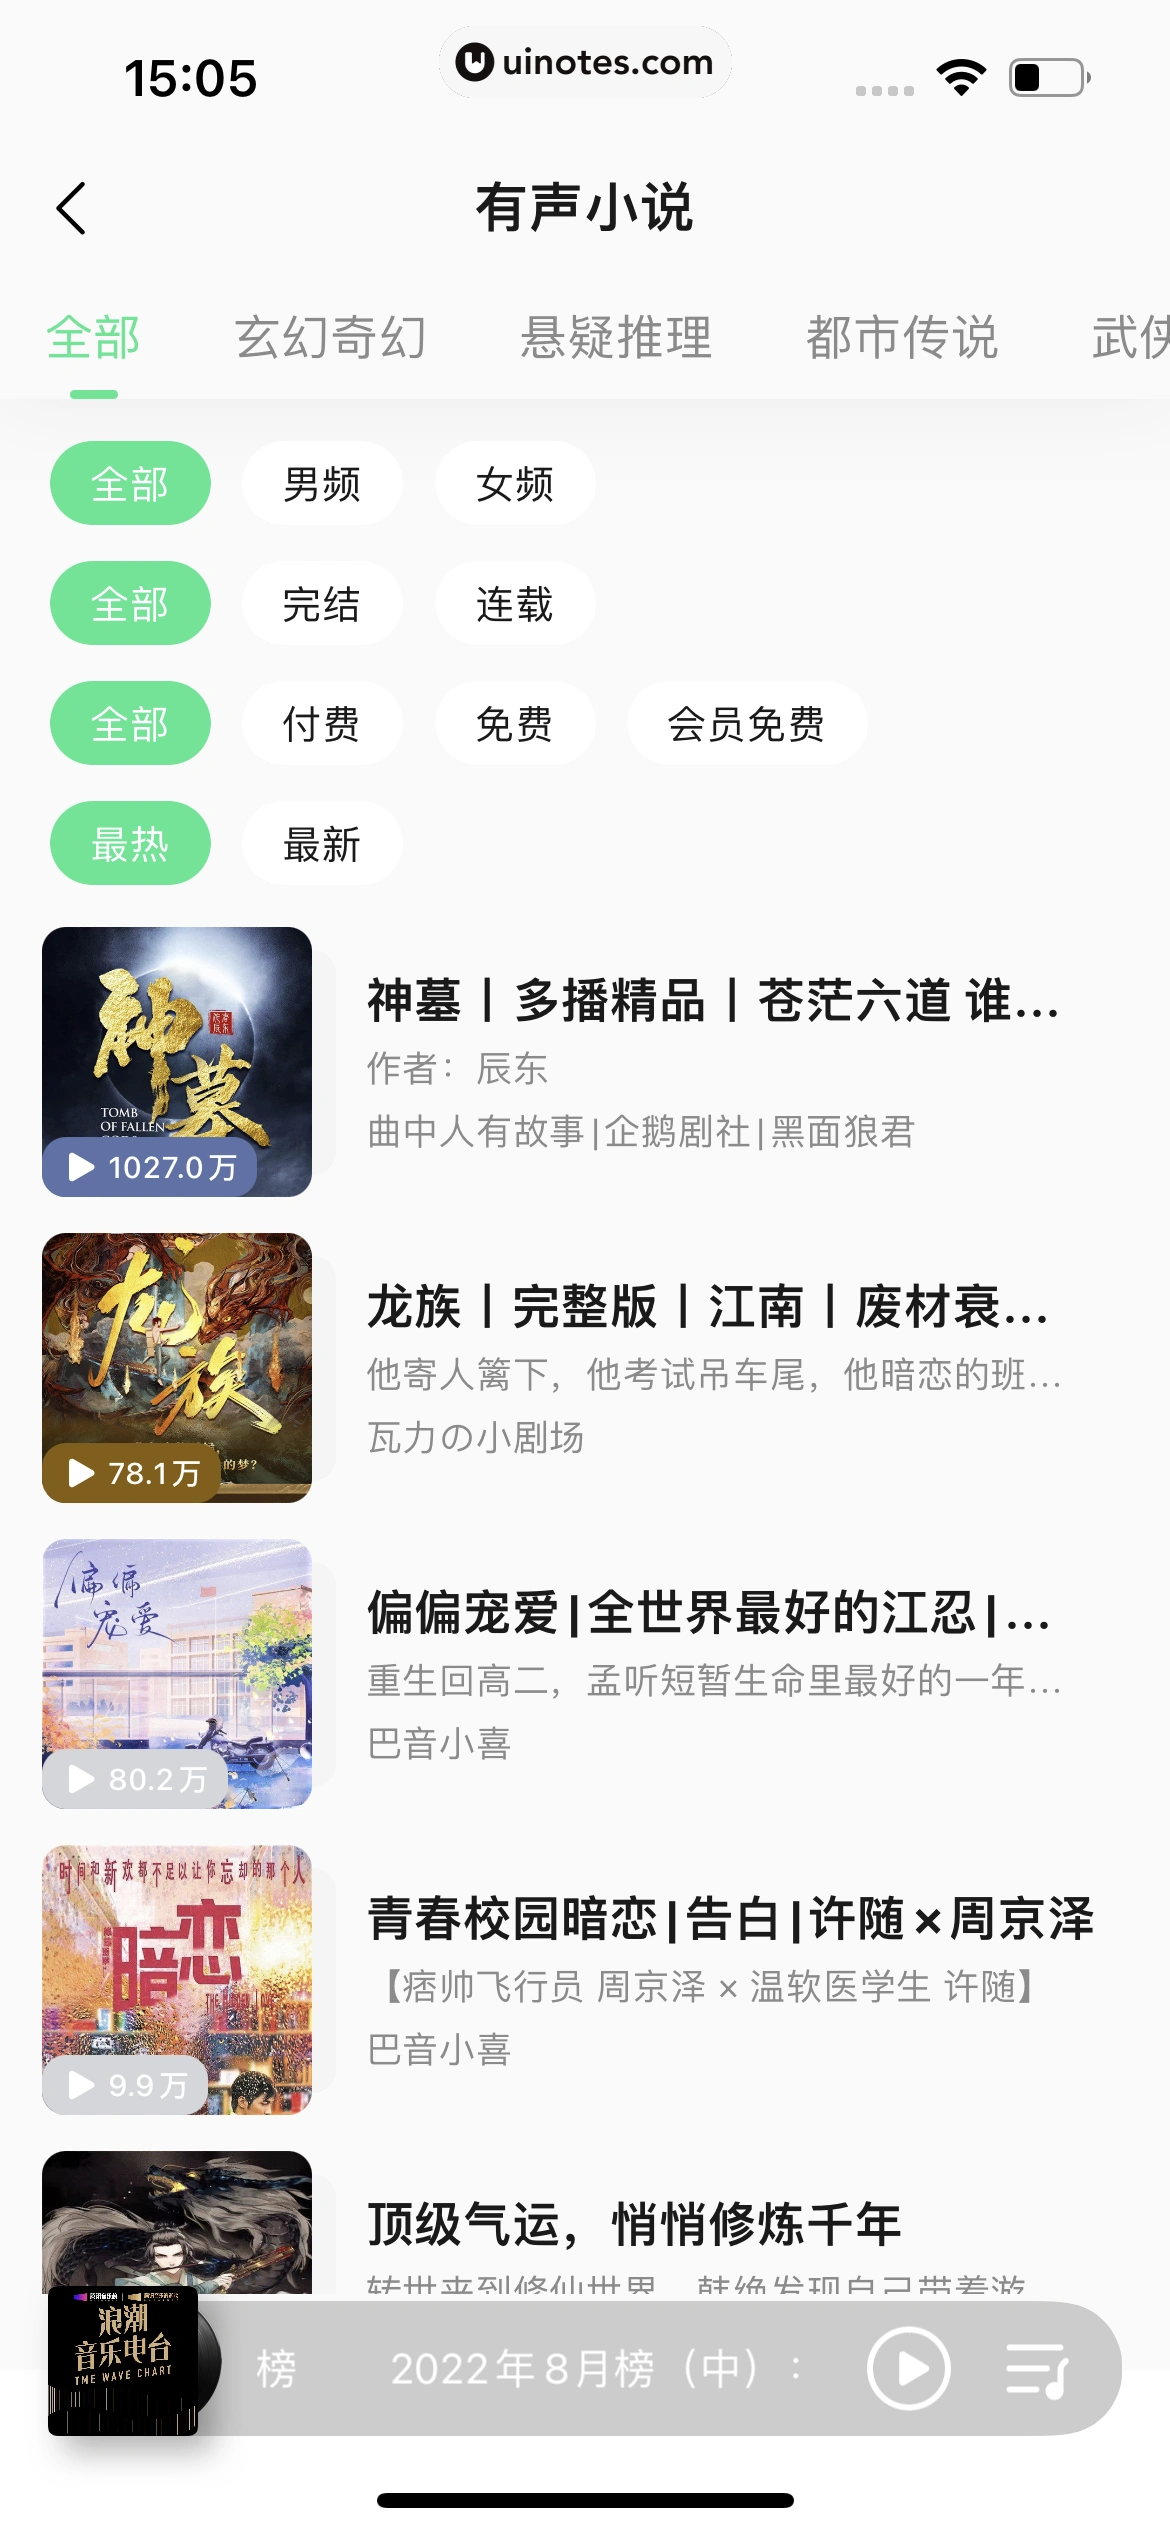 QQ音乐 App 截图 310 - UI Notes